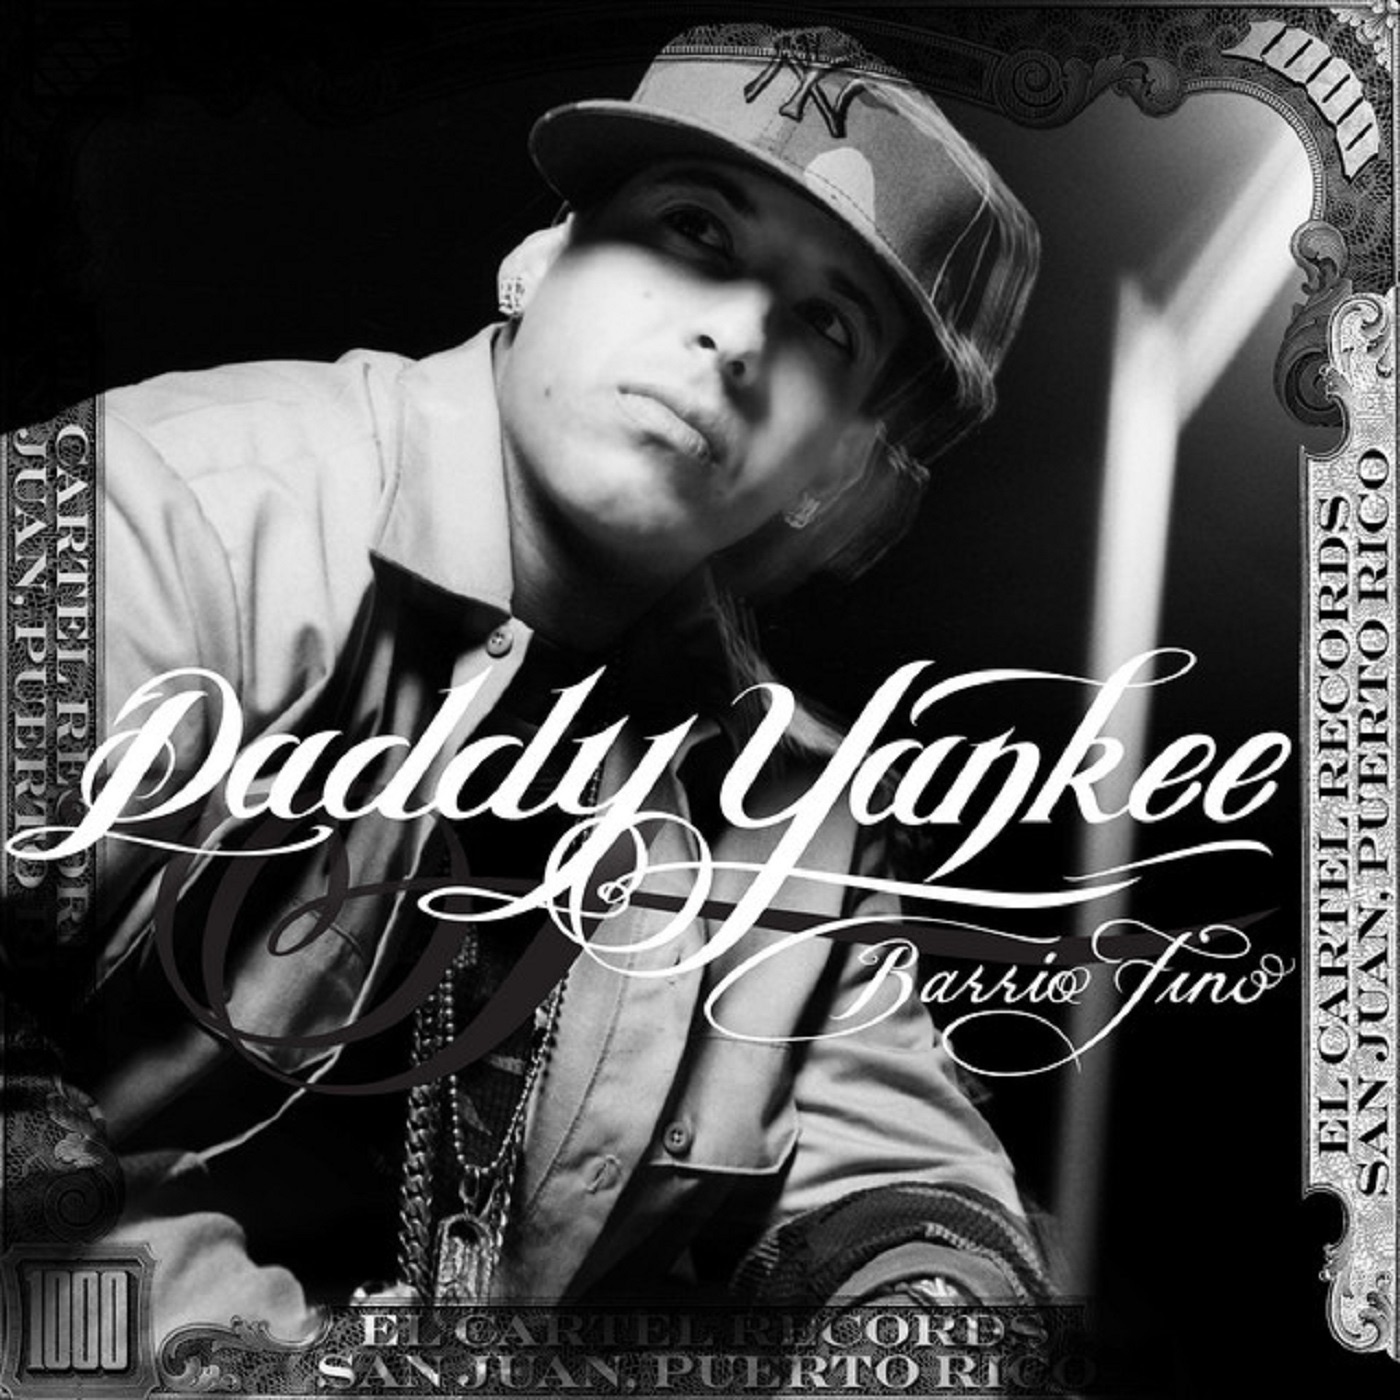 Barrio Fino by Daddy Yankee